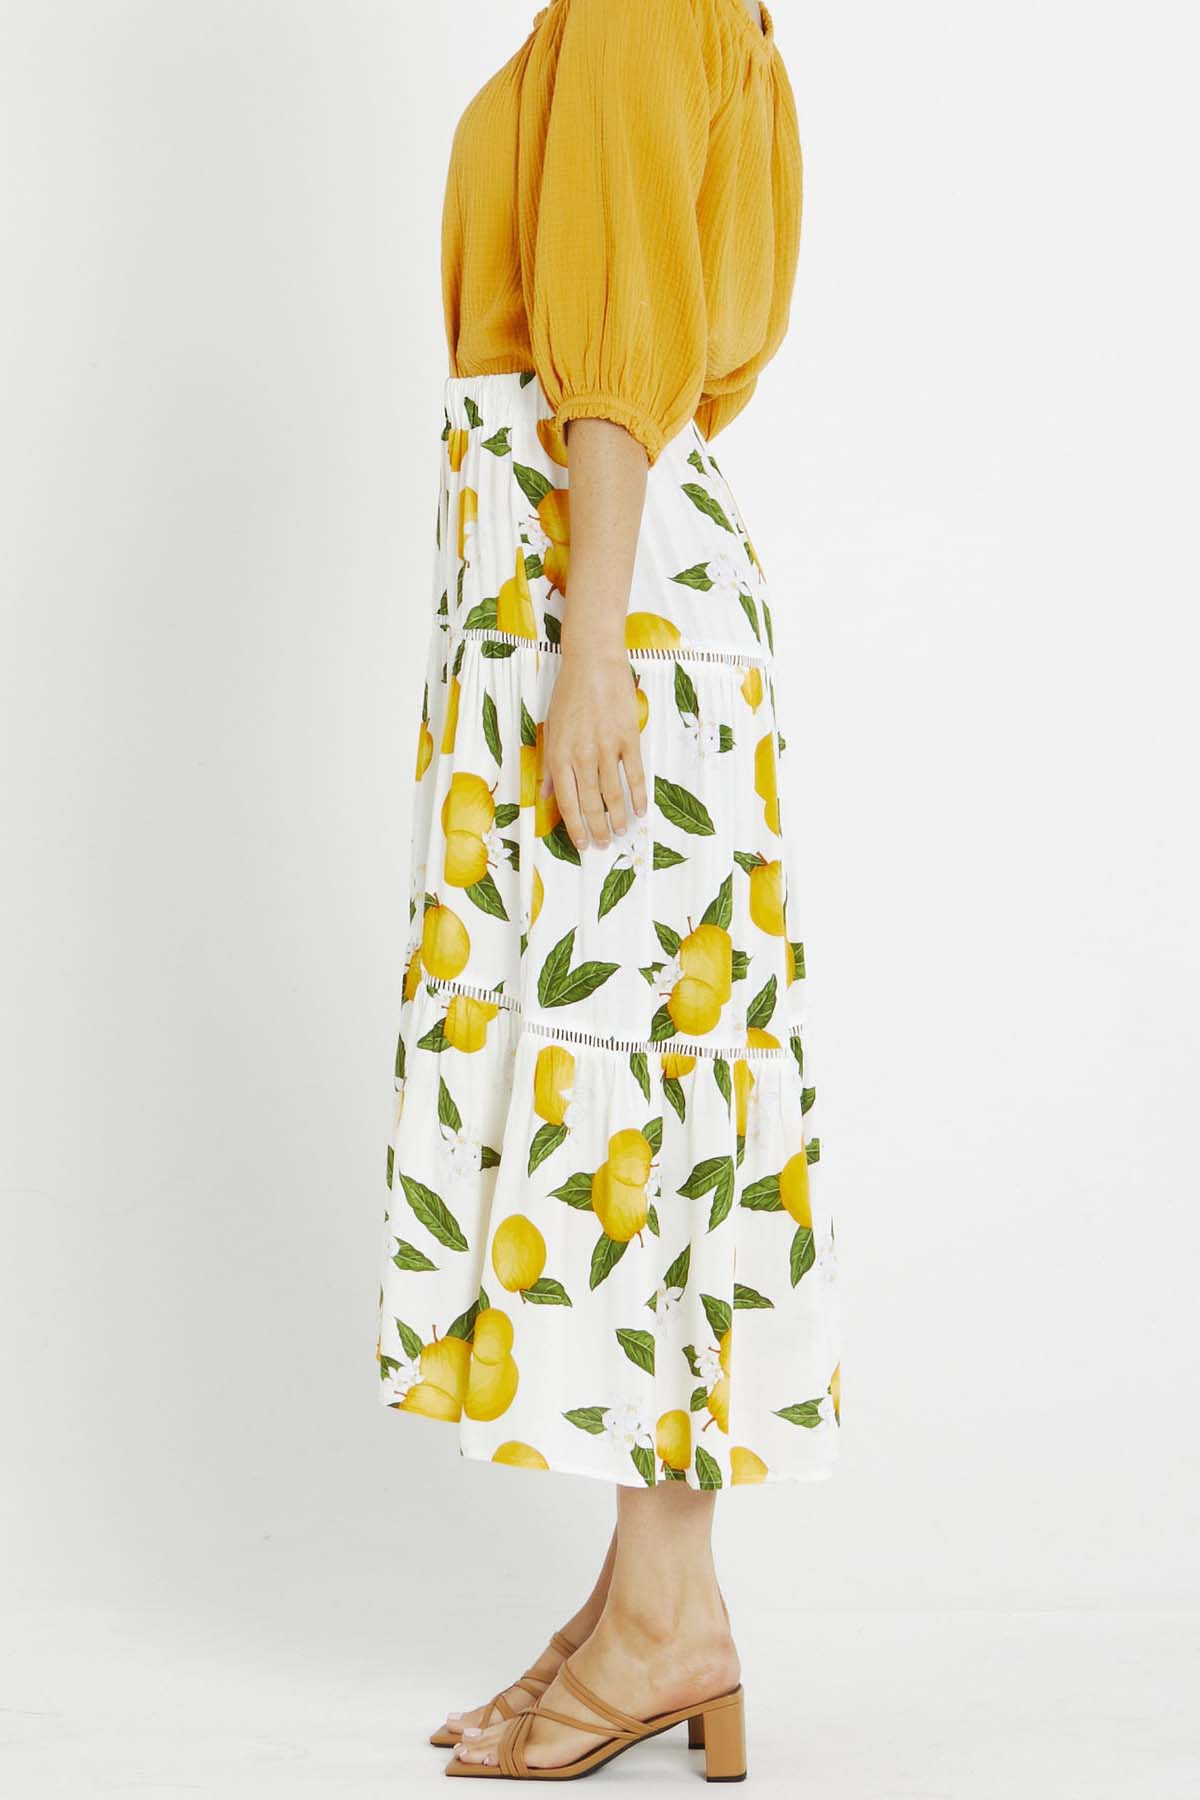 Sass Freya Midi Skirt in Oranges print - Hey Sara